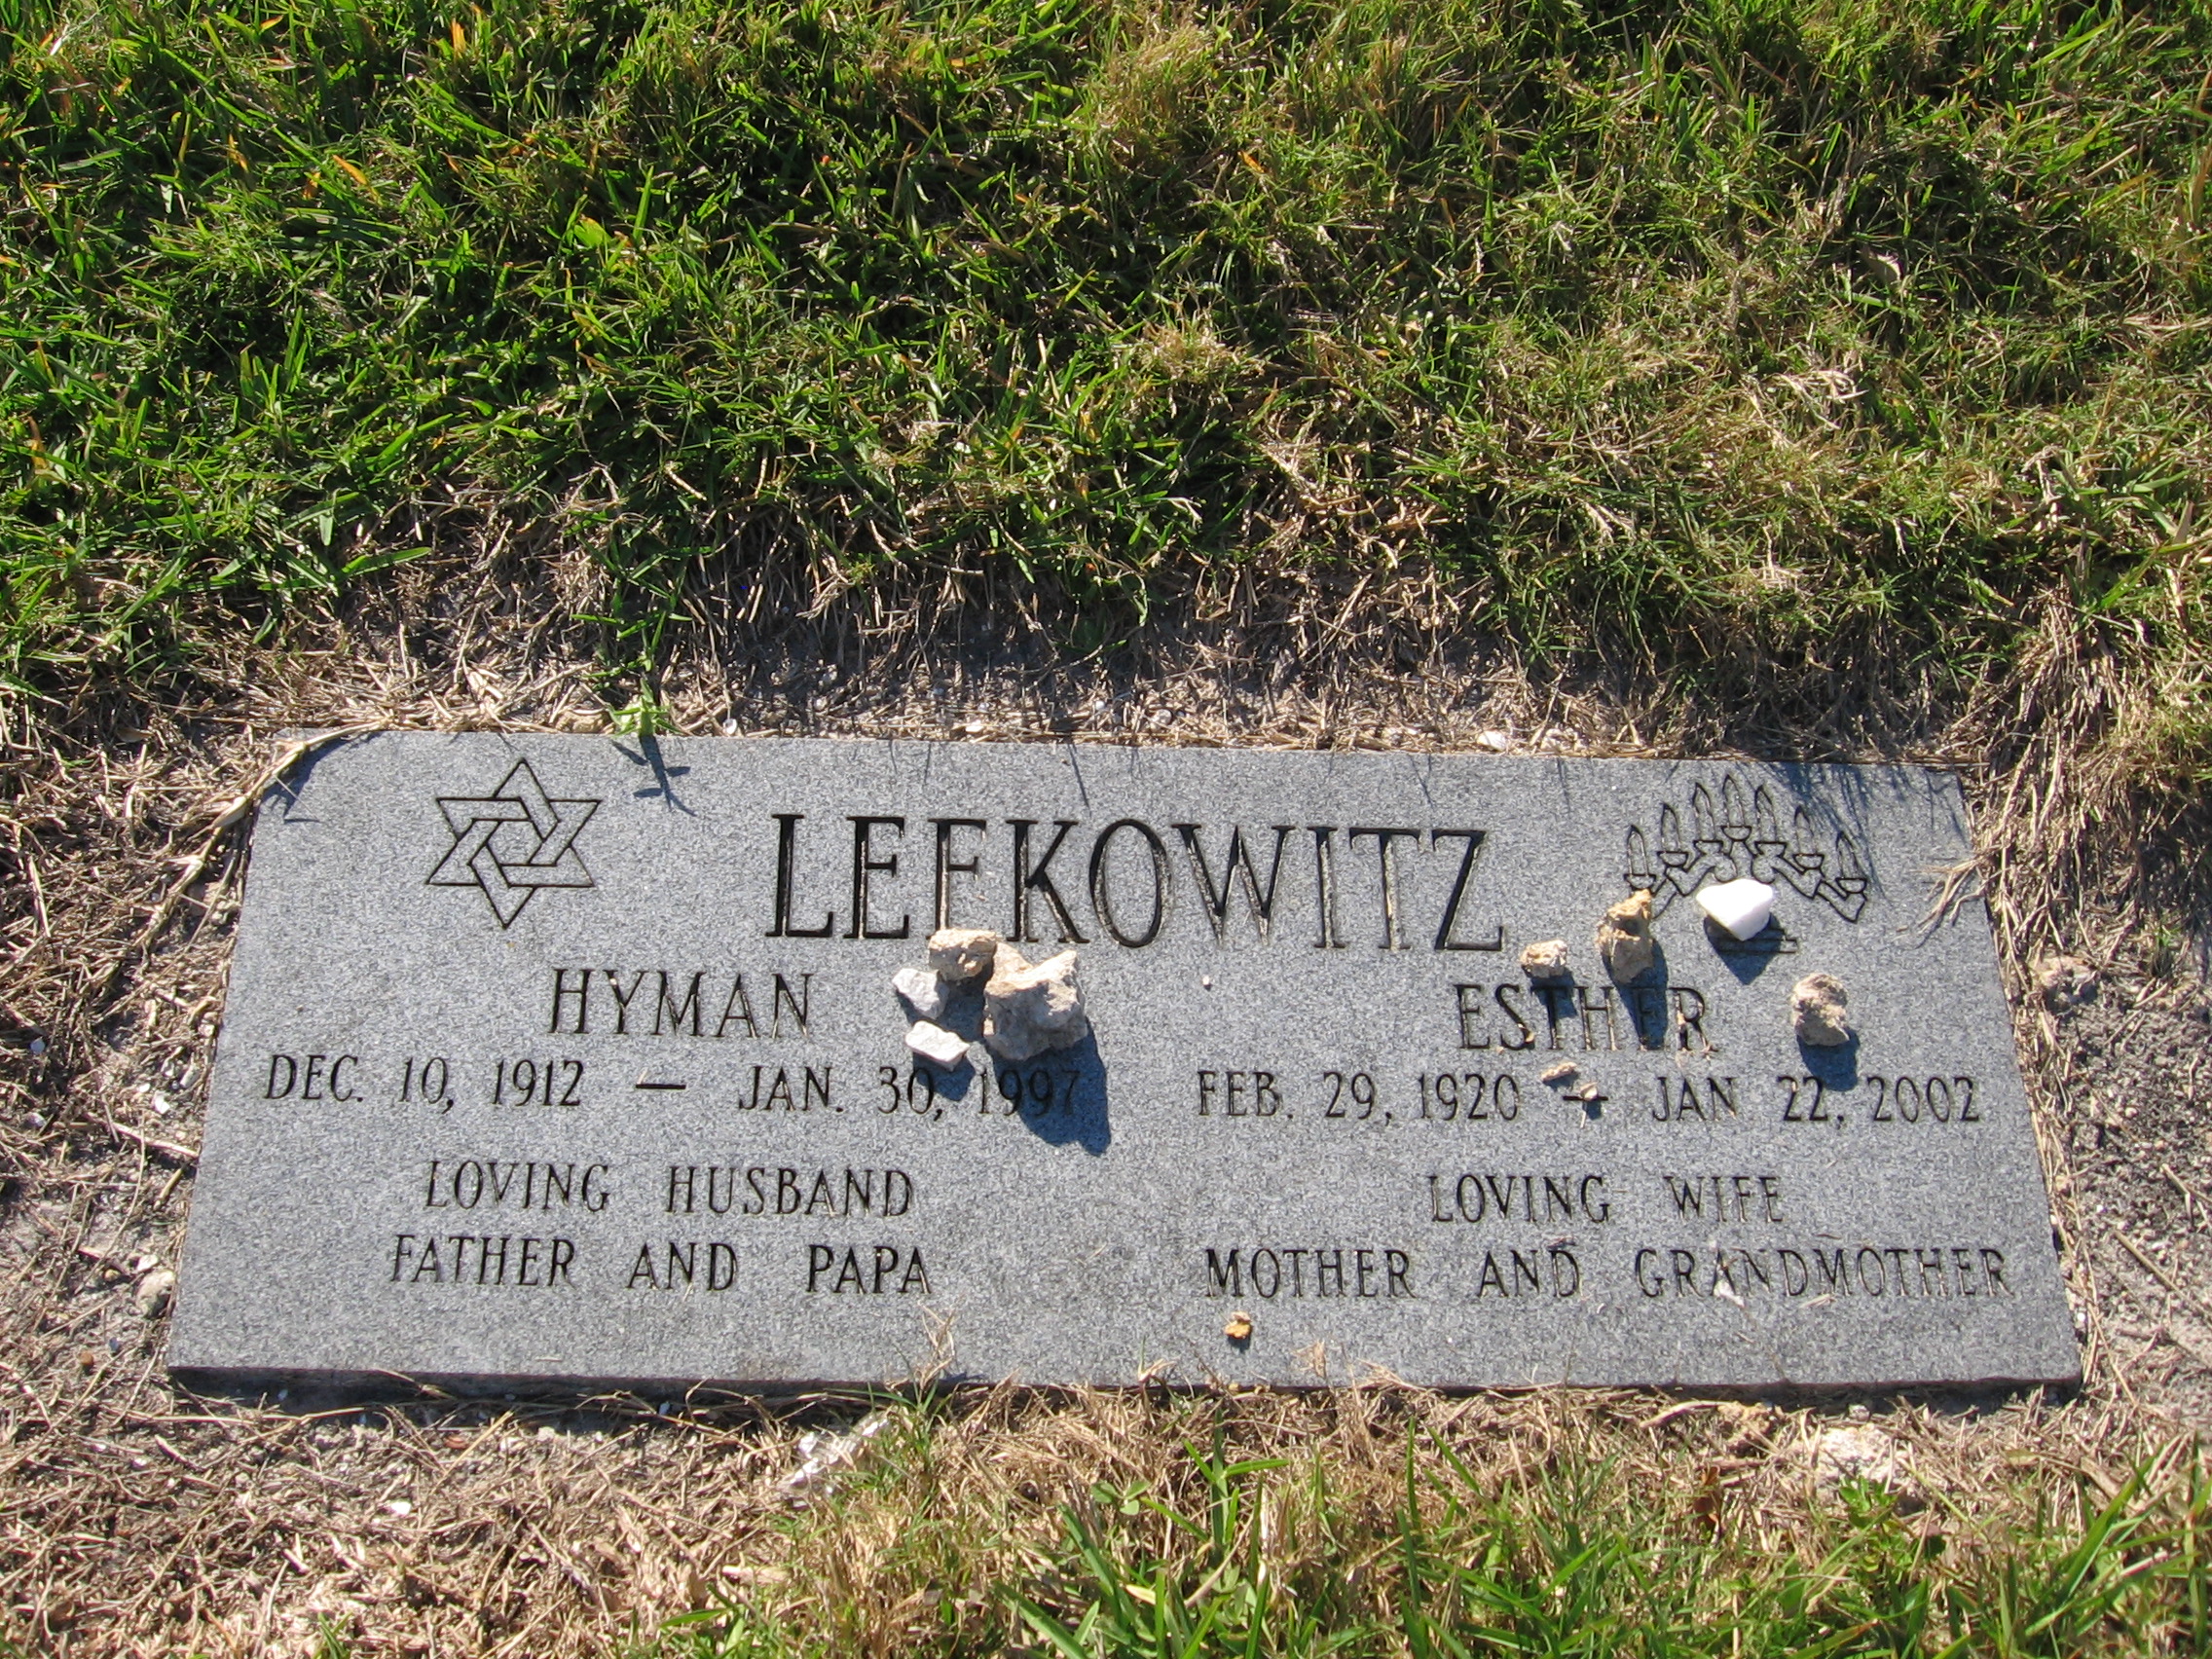 Hyman Lefkowitz